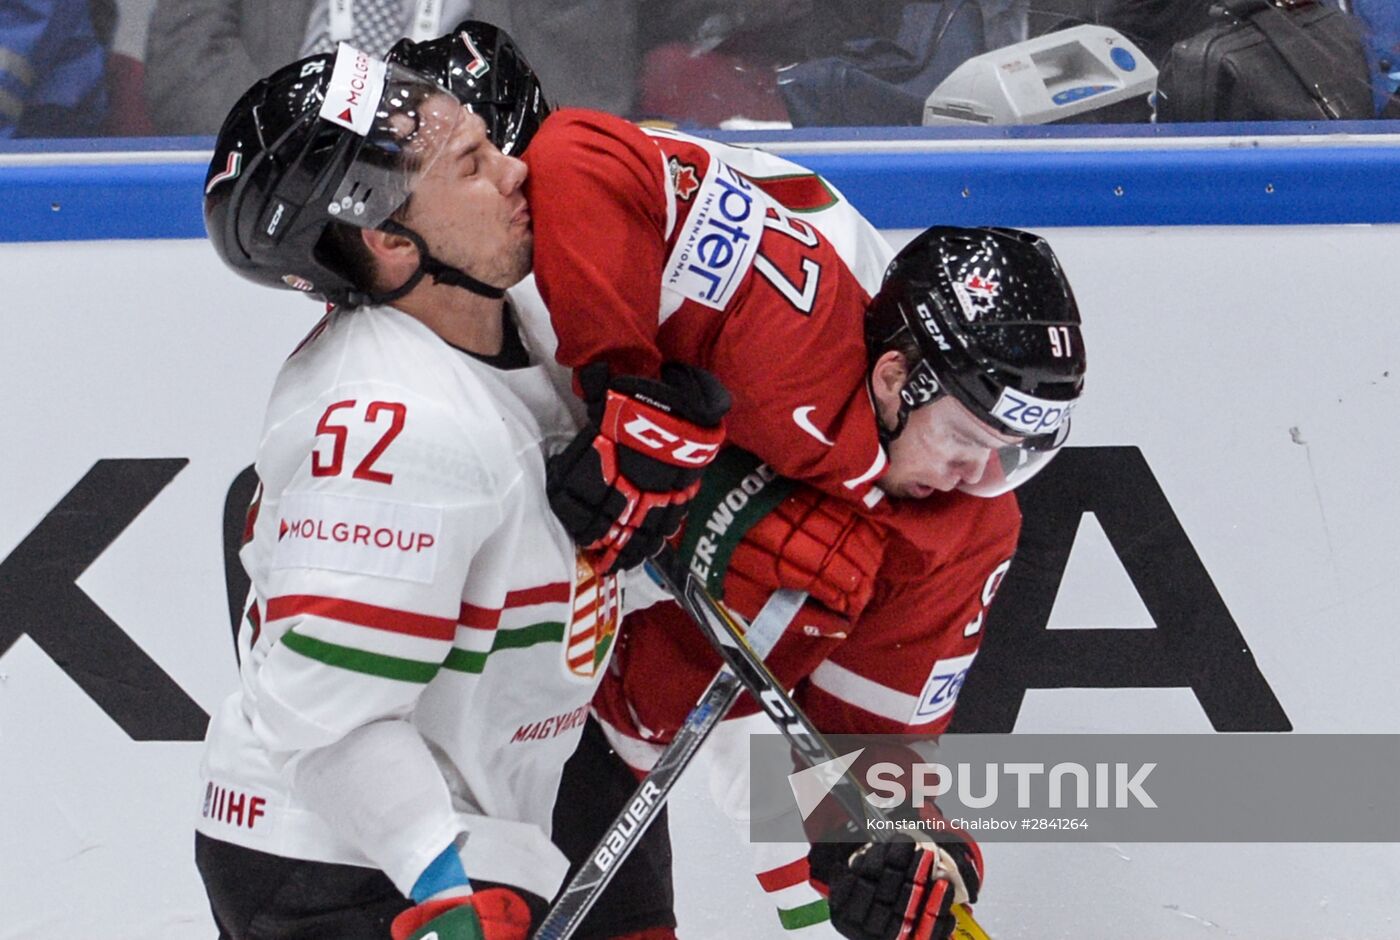 2016 IIHF World Ice Hockey Championship. Hungary vs. Canada